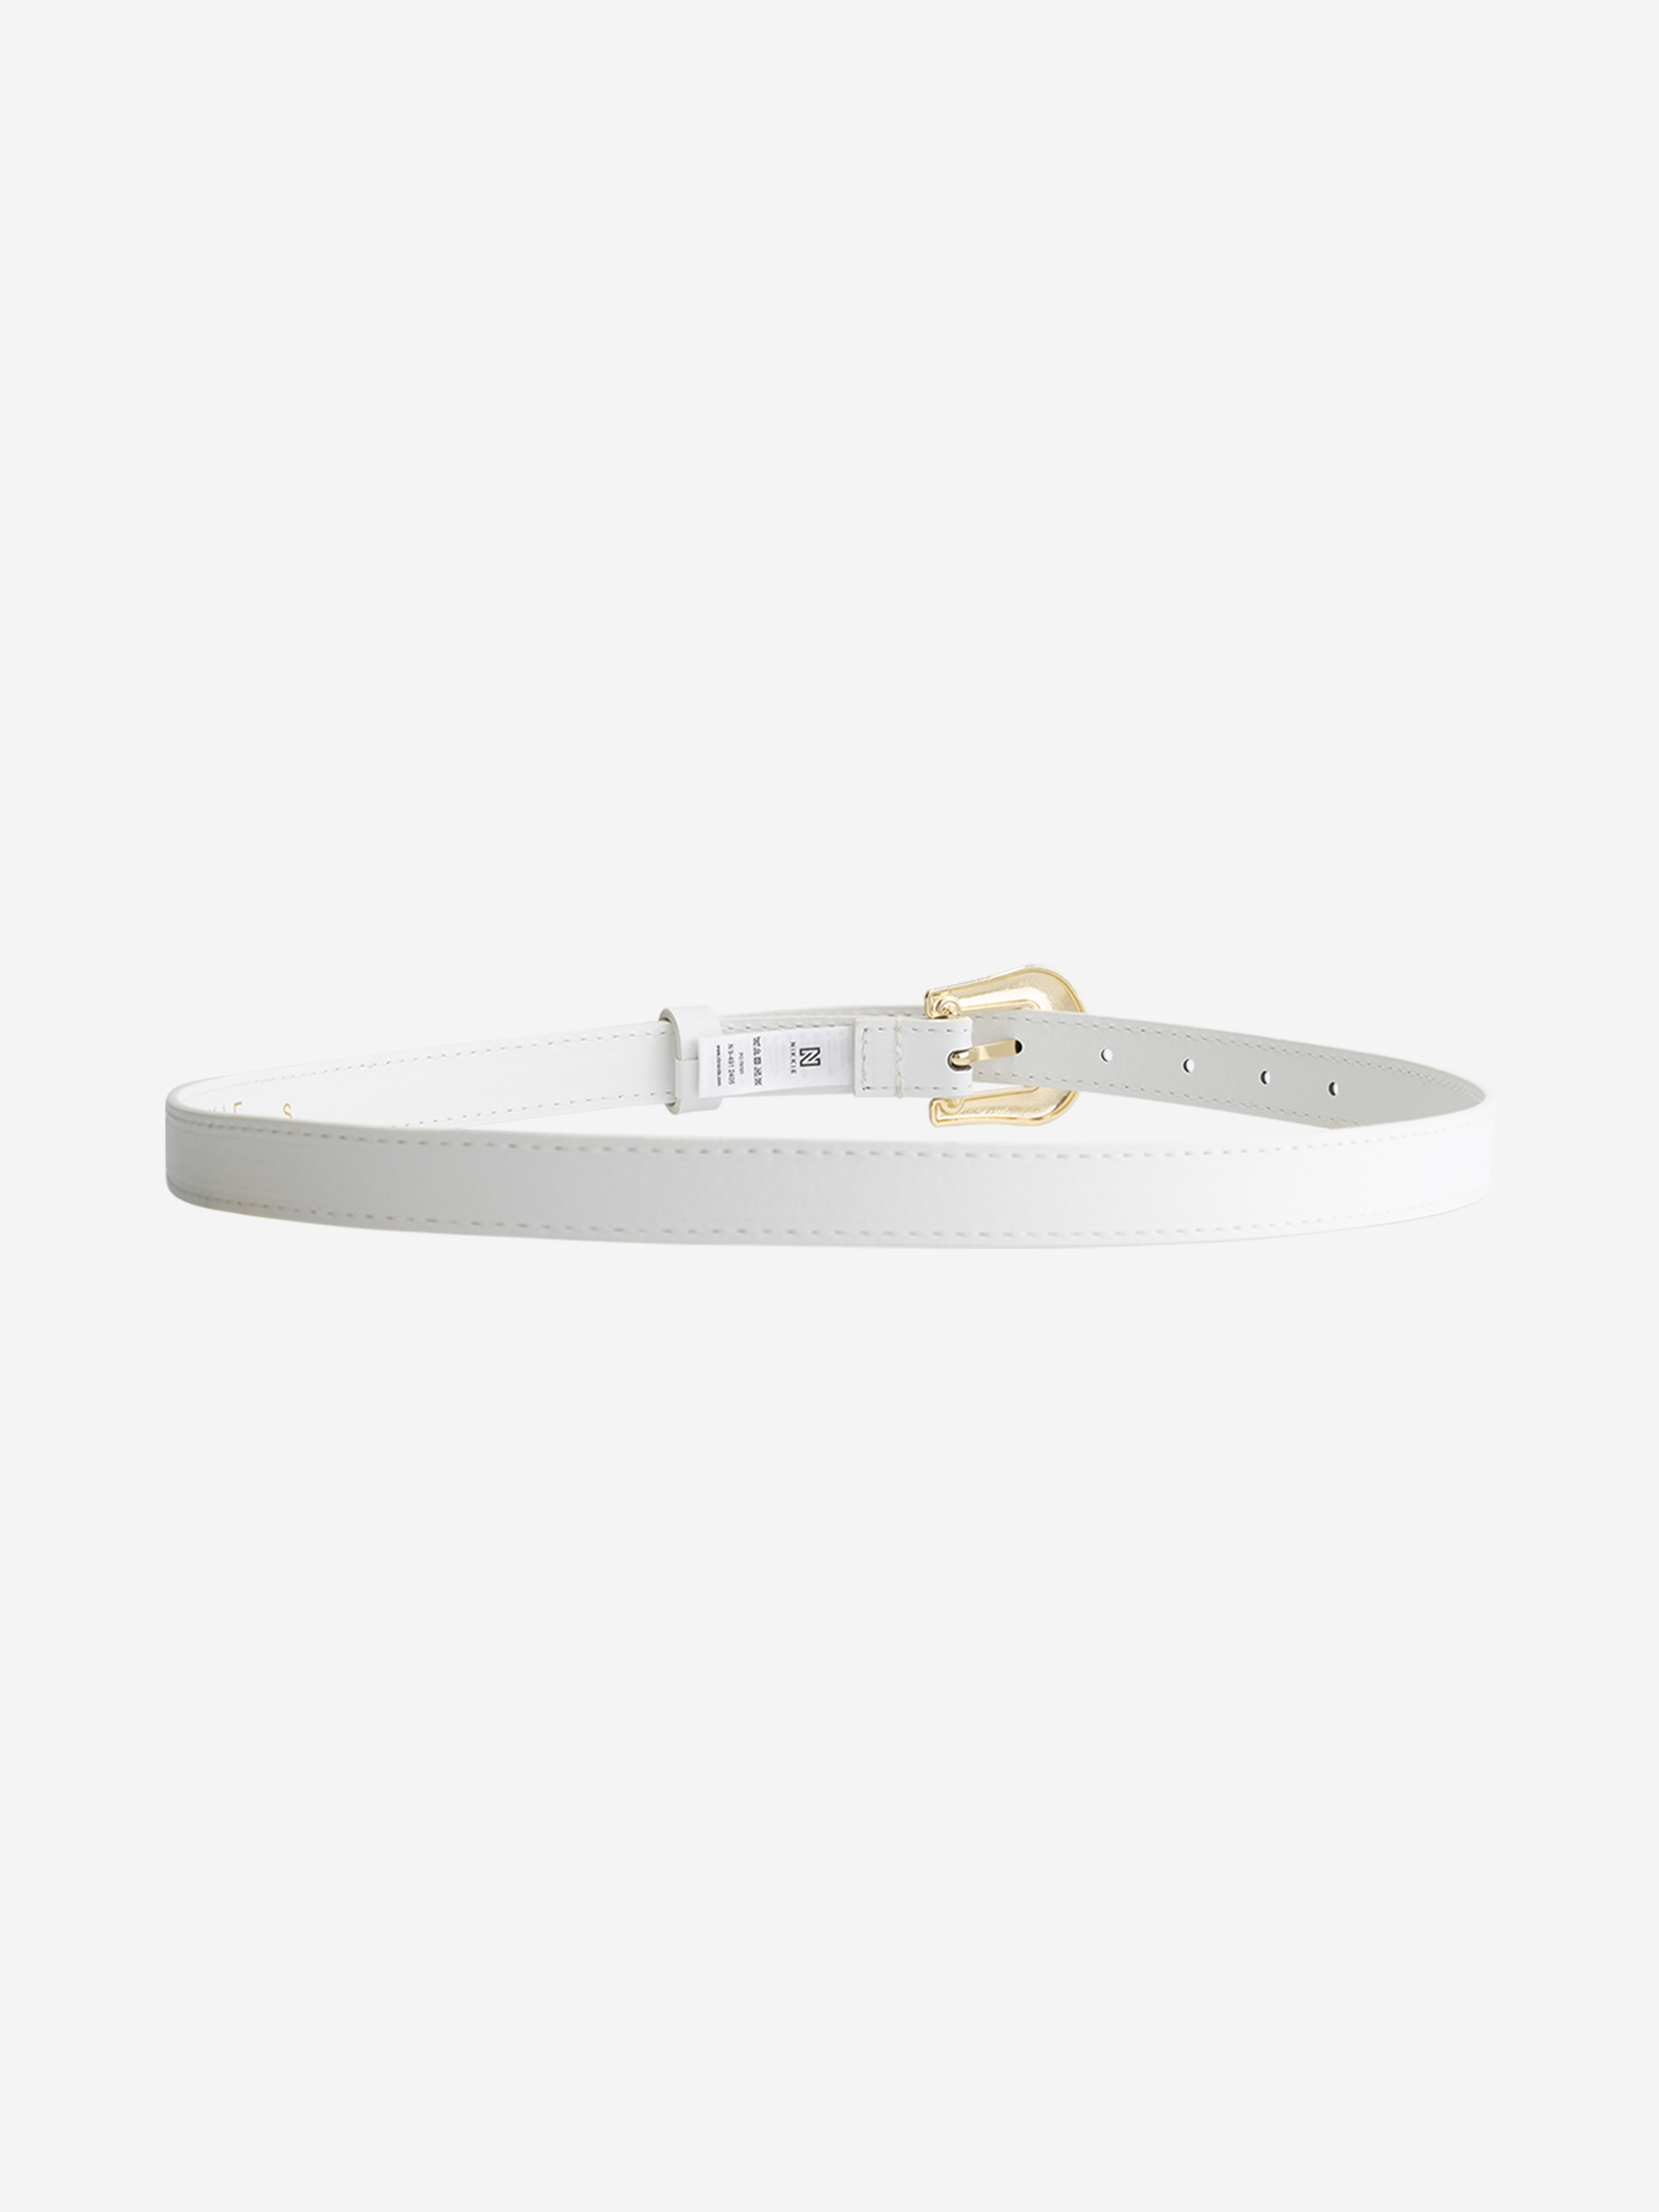 Hip belt with N-logo buckle